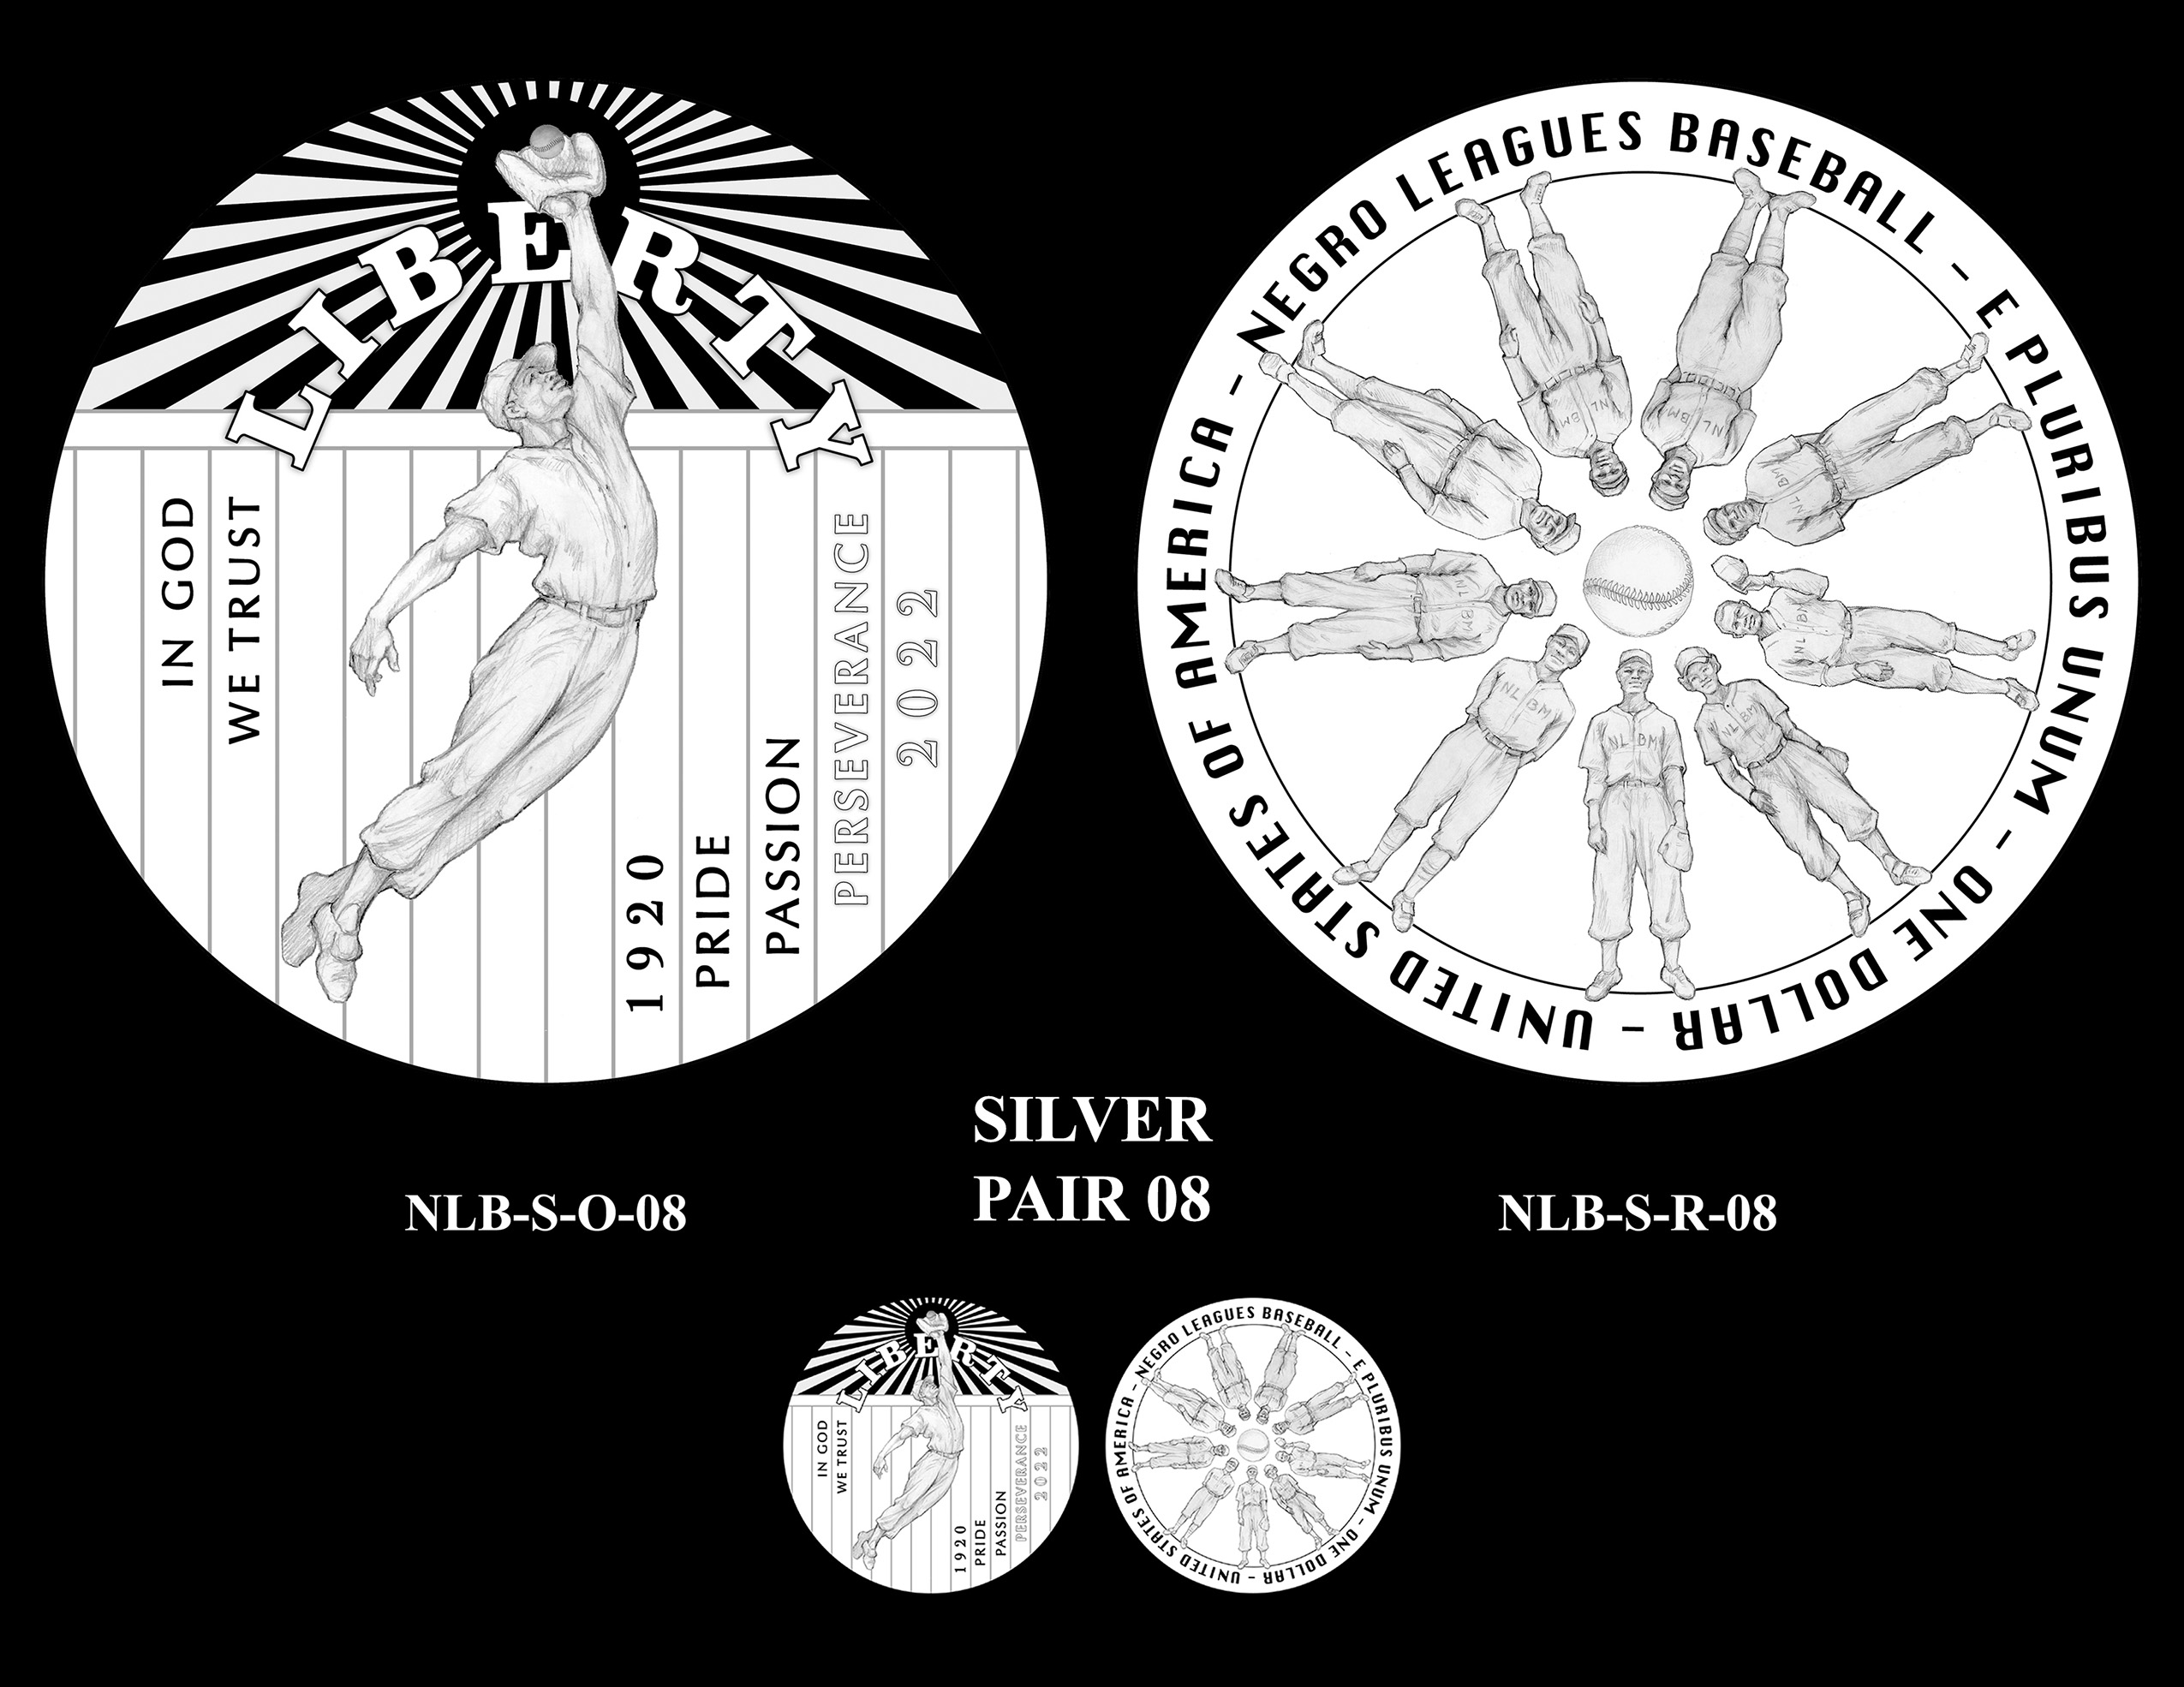 Silver Pair 08 -- Negro Leagues Baseball Commemorative Coin Program